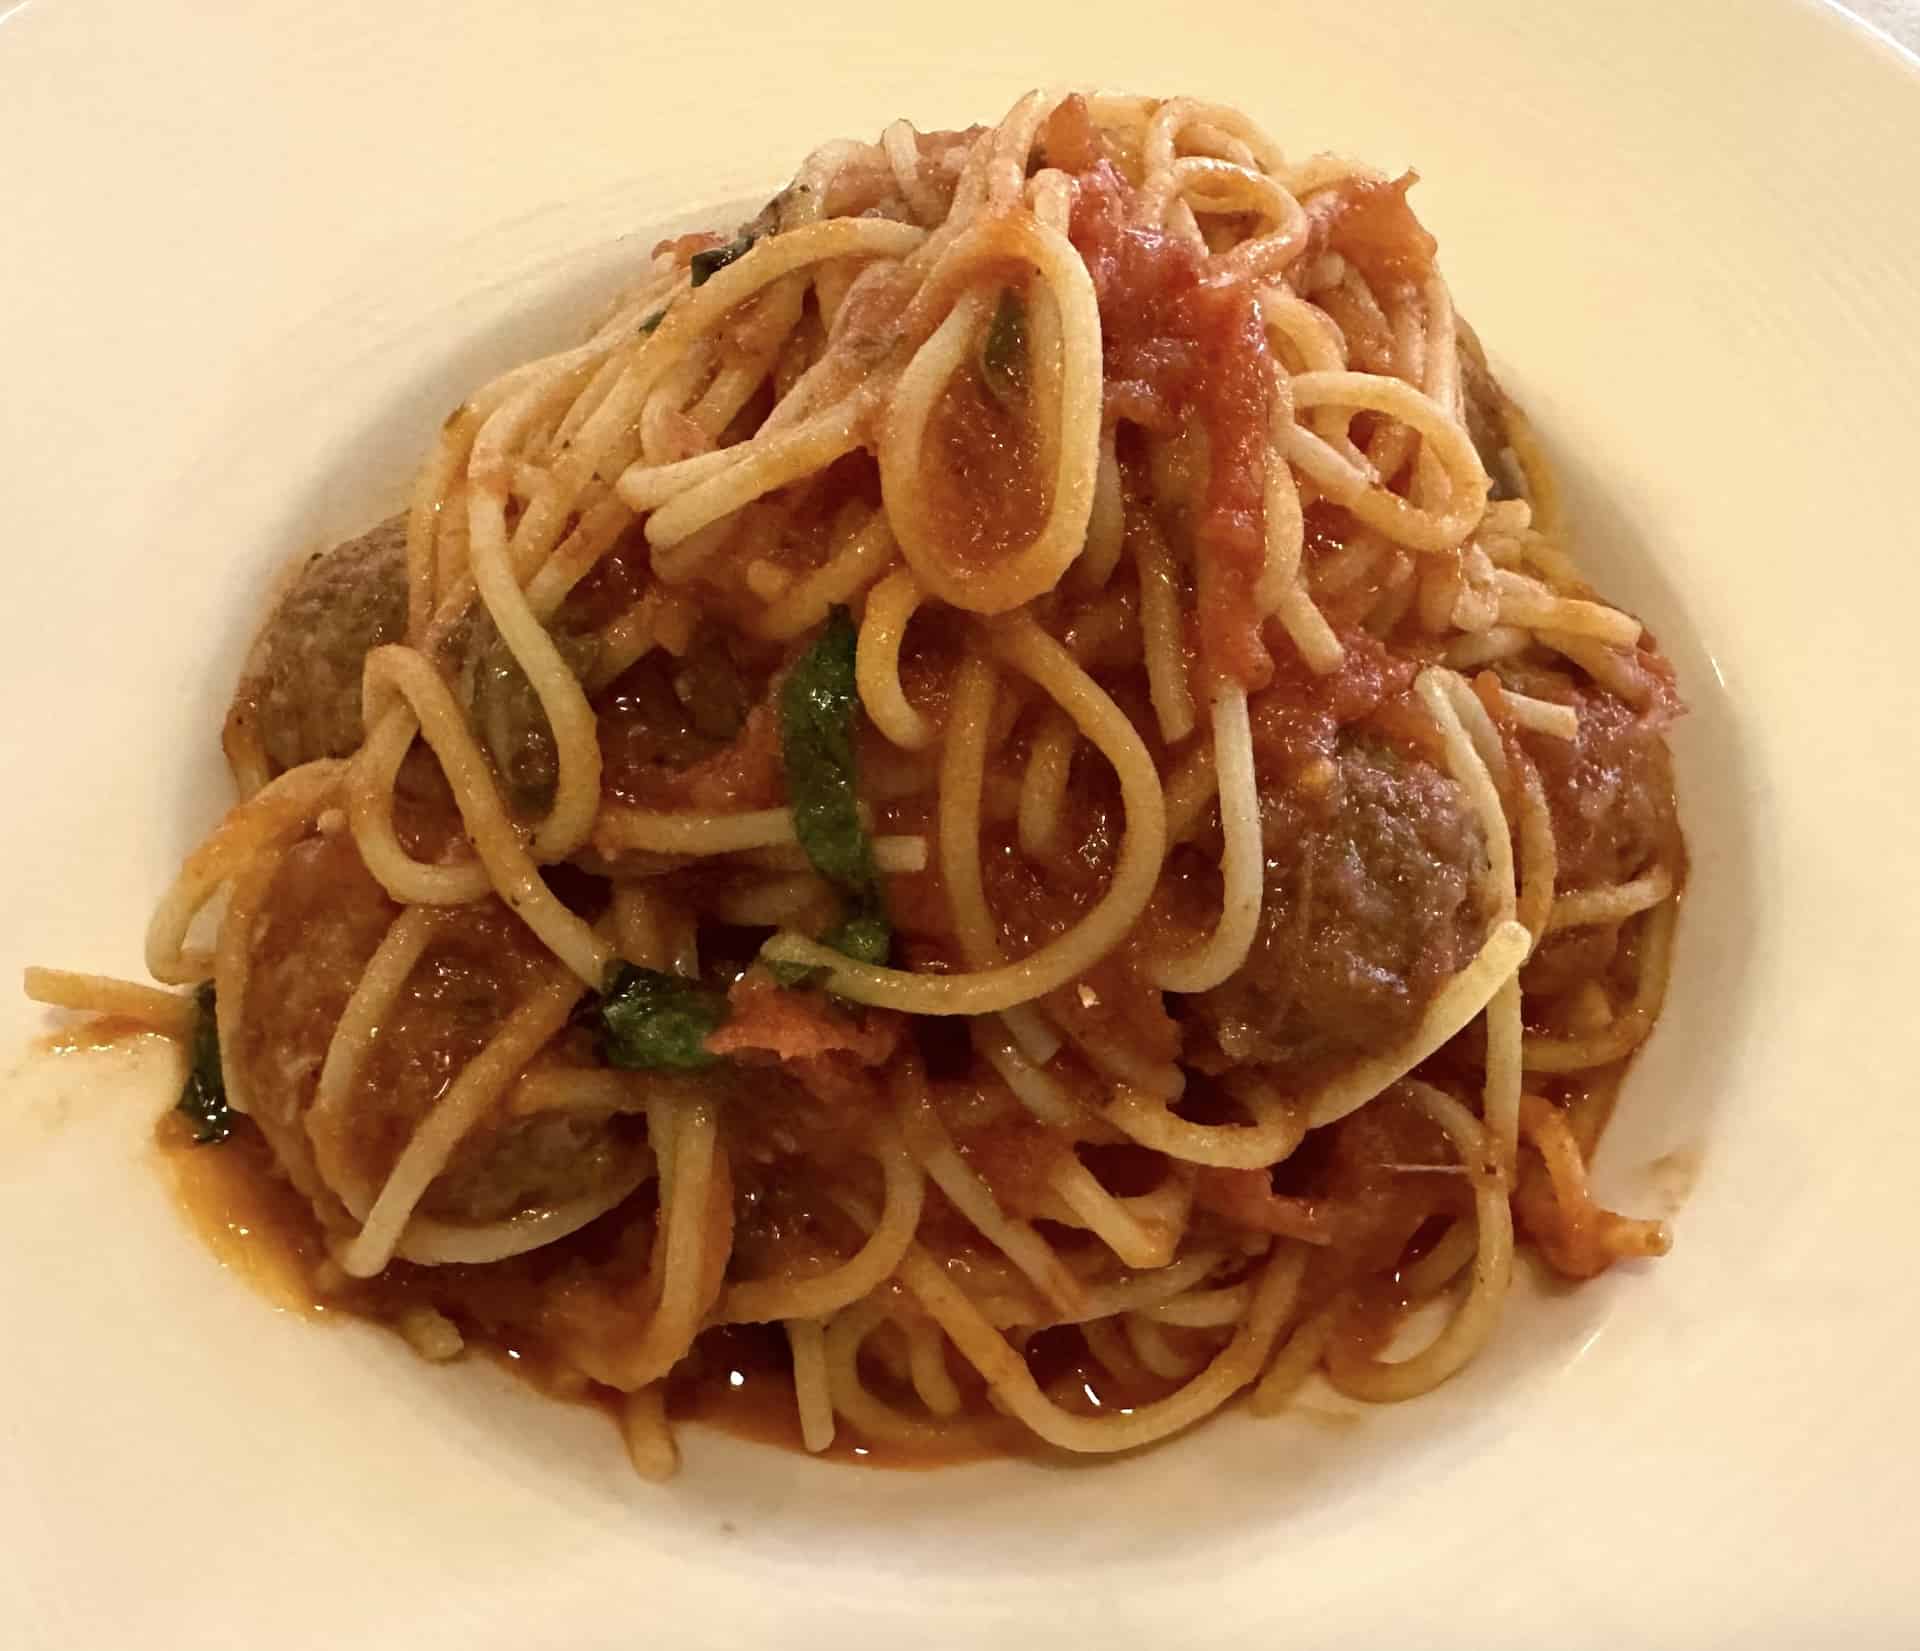 Spaghetti with meatballs at Sole Mare